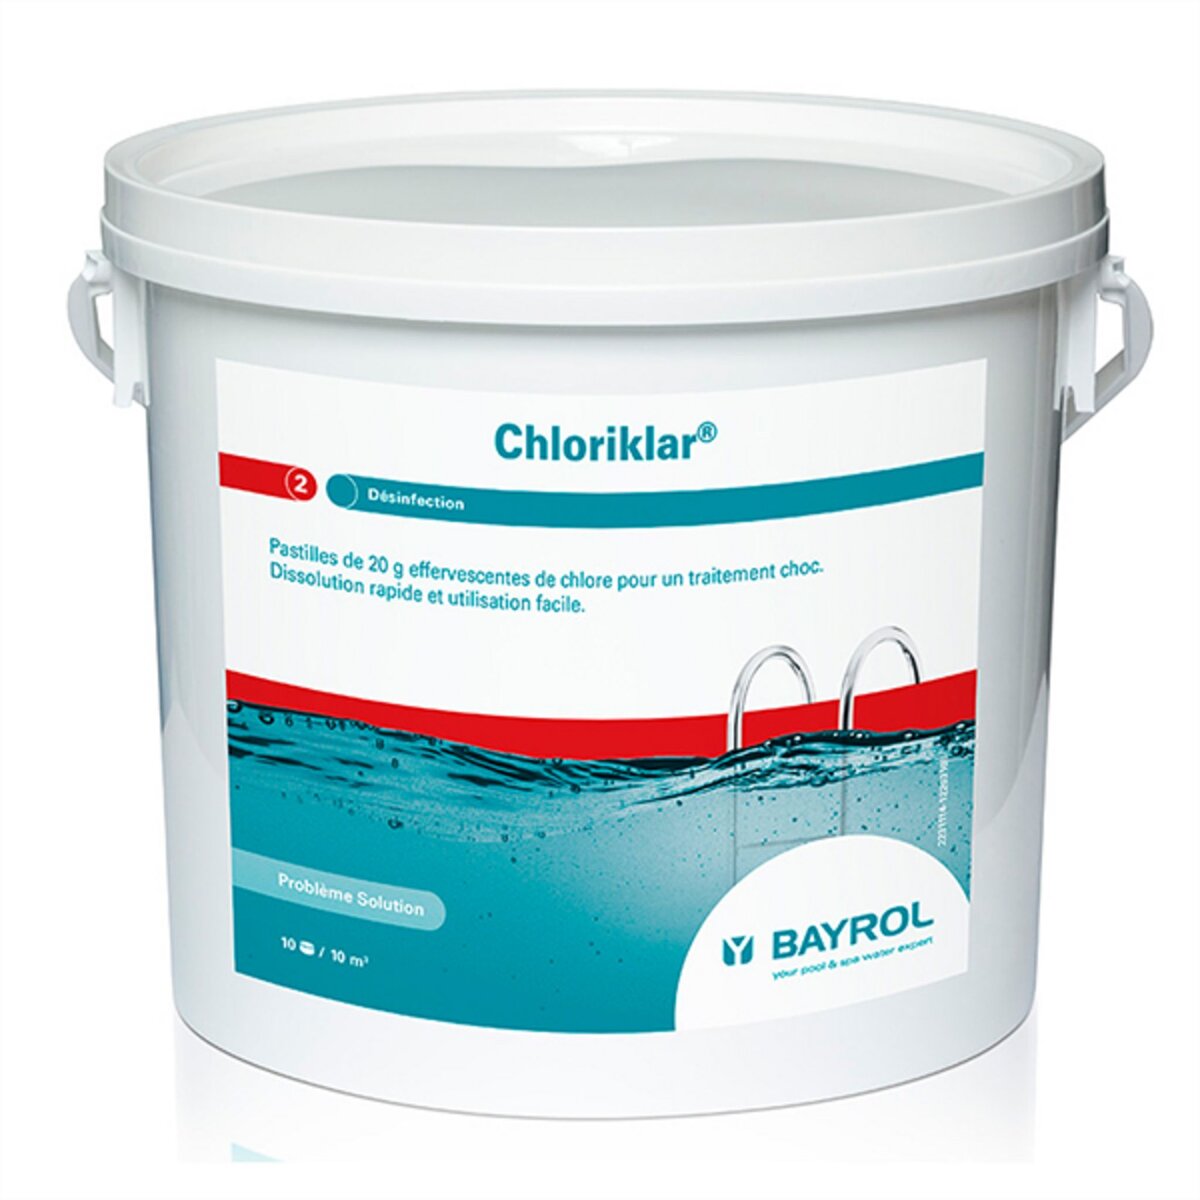 Bayrol Chlore choc pastille 5kg - chloriklar pas cher 